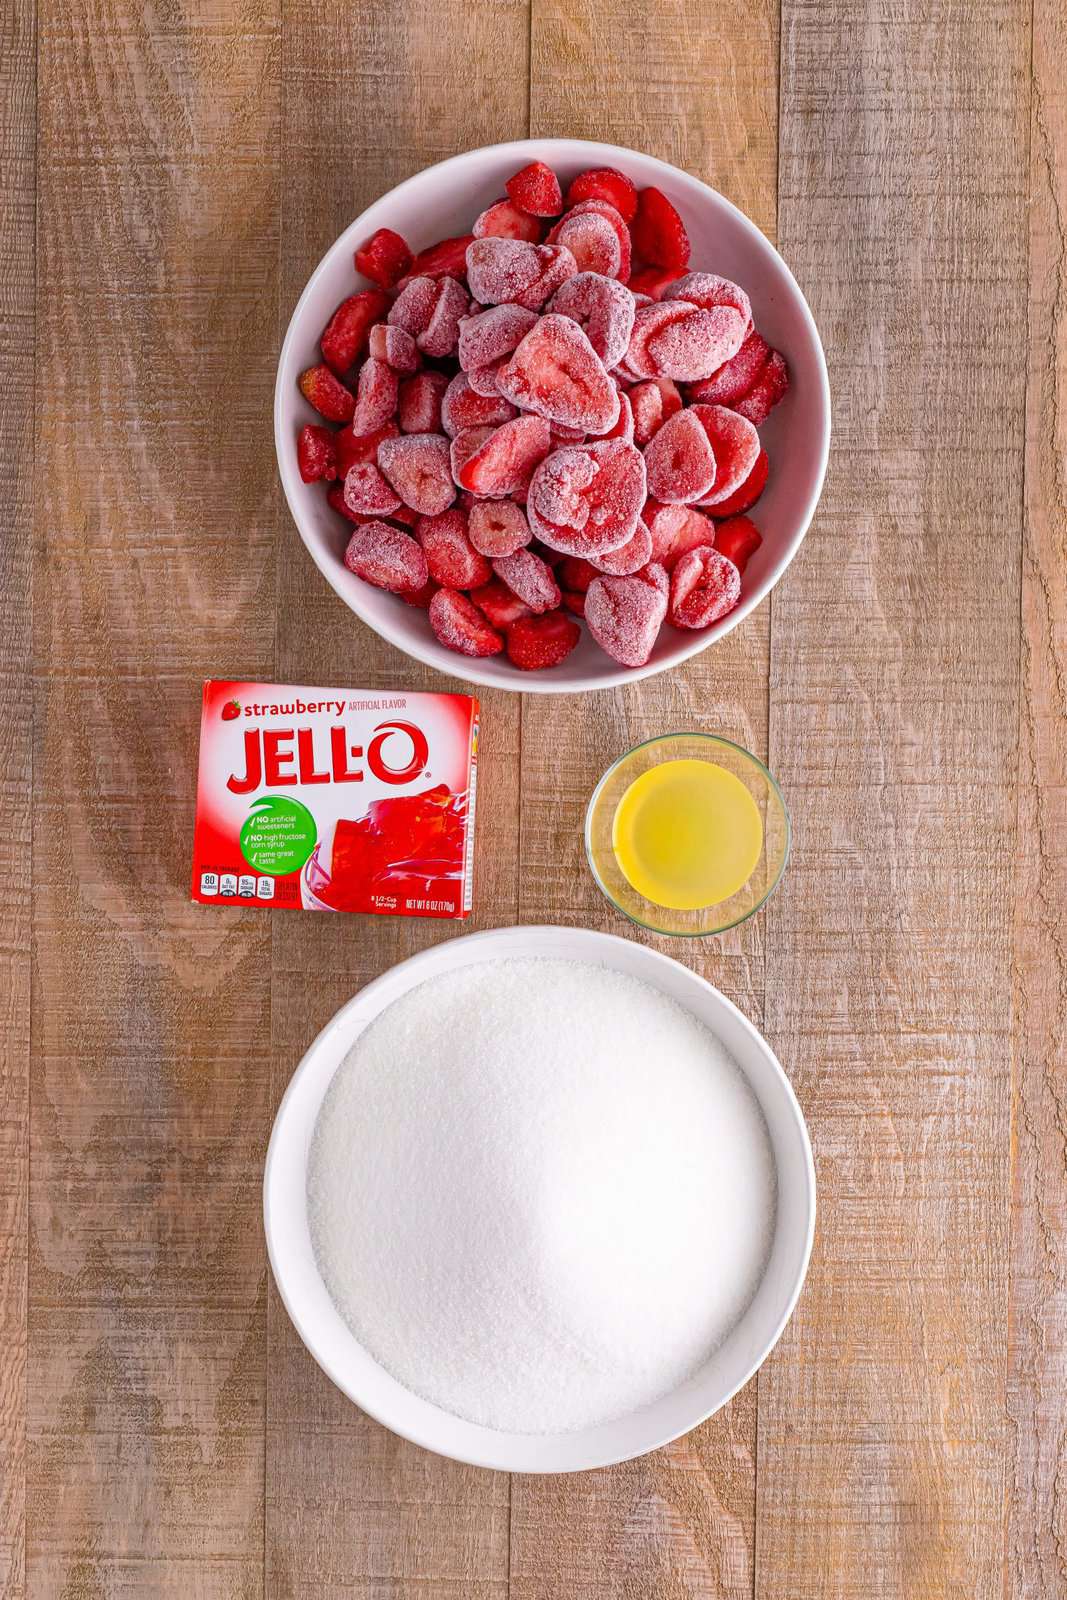 Frozen strawberries, sugar, strawberry Jell-O, and lemon juice. 